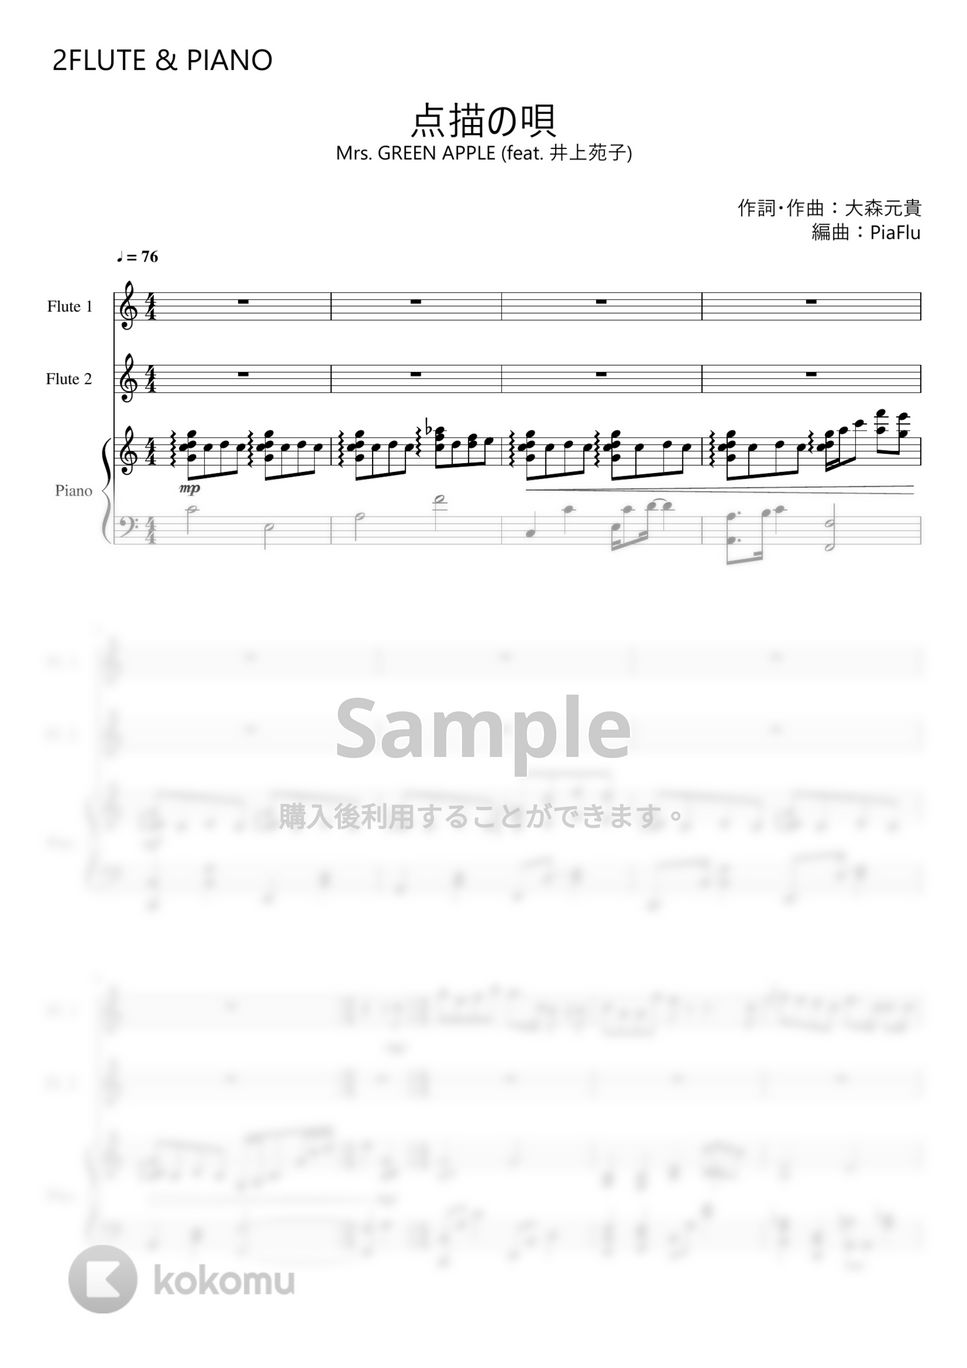 Mrs.GREEN APPLE (FEAT.井上苑子) - 点描の唄 (フルート2重奏&ピアノ伴奏) by PiaFlu